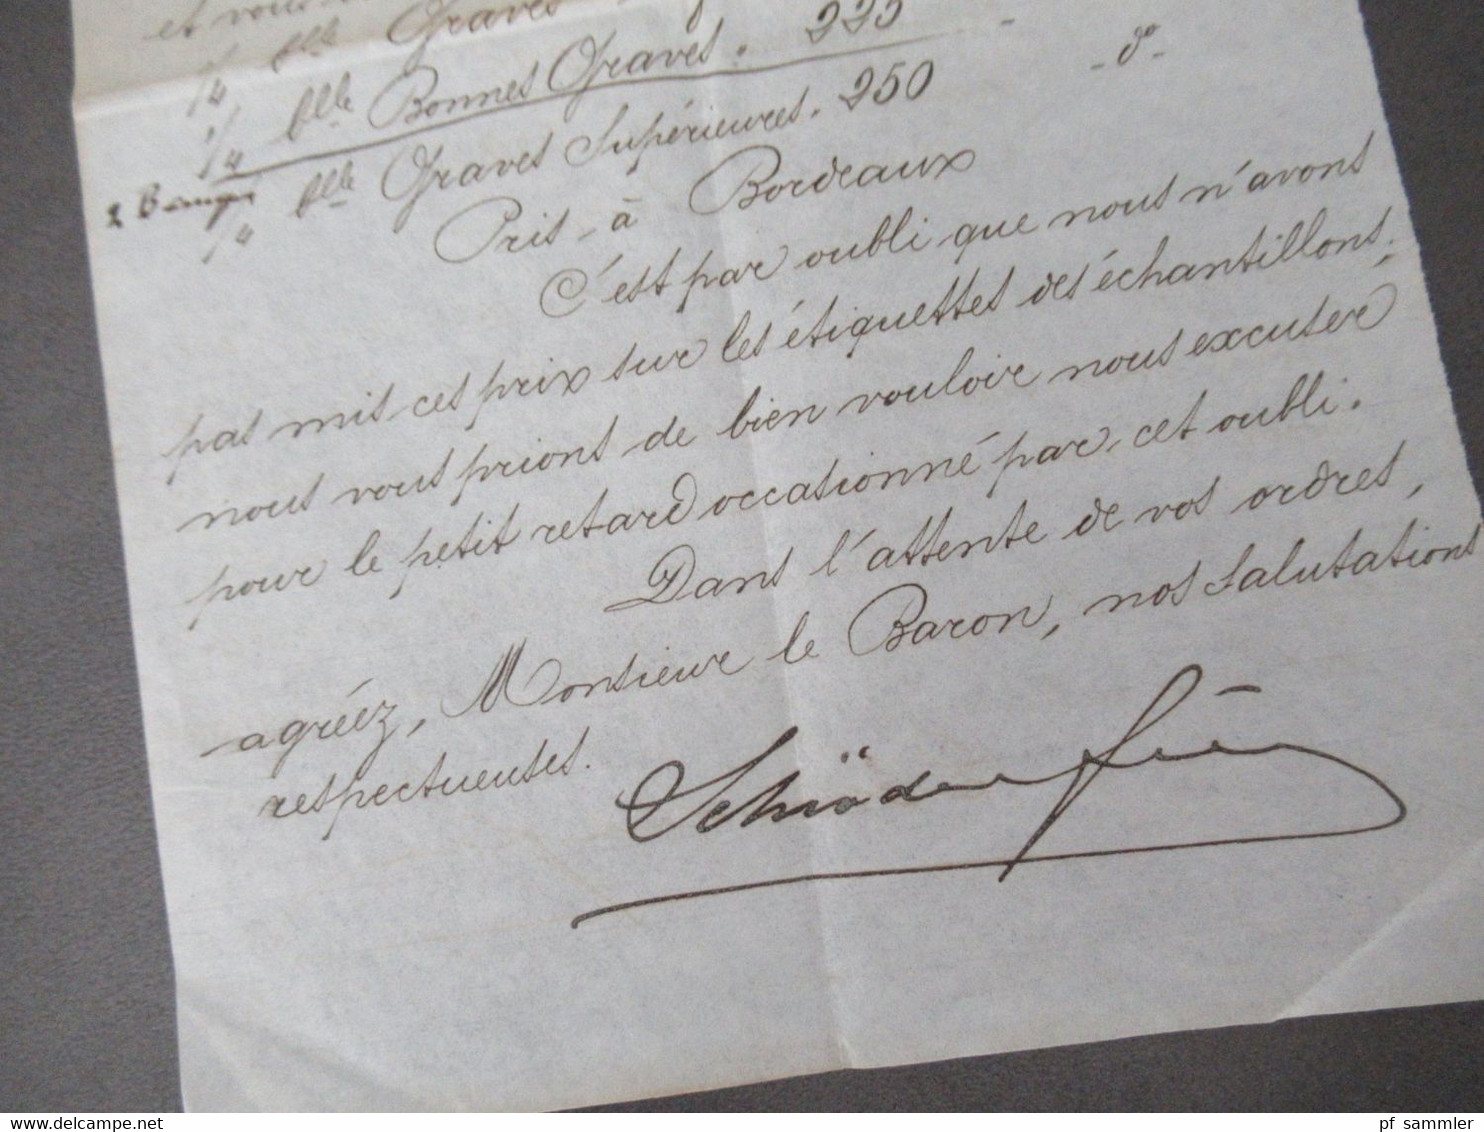 Frankreich 1892 Brief / Inhalt / Rechnung Briefkopf Schröder Freres Bordeaux An Den Baron Brincard Chateau La Bizoliere - Documents De La Poste